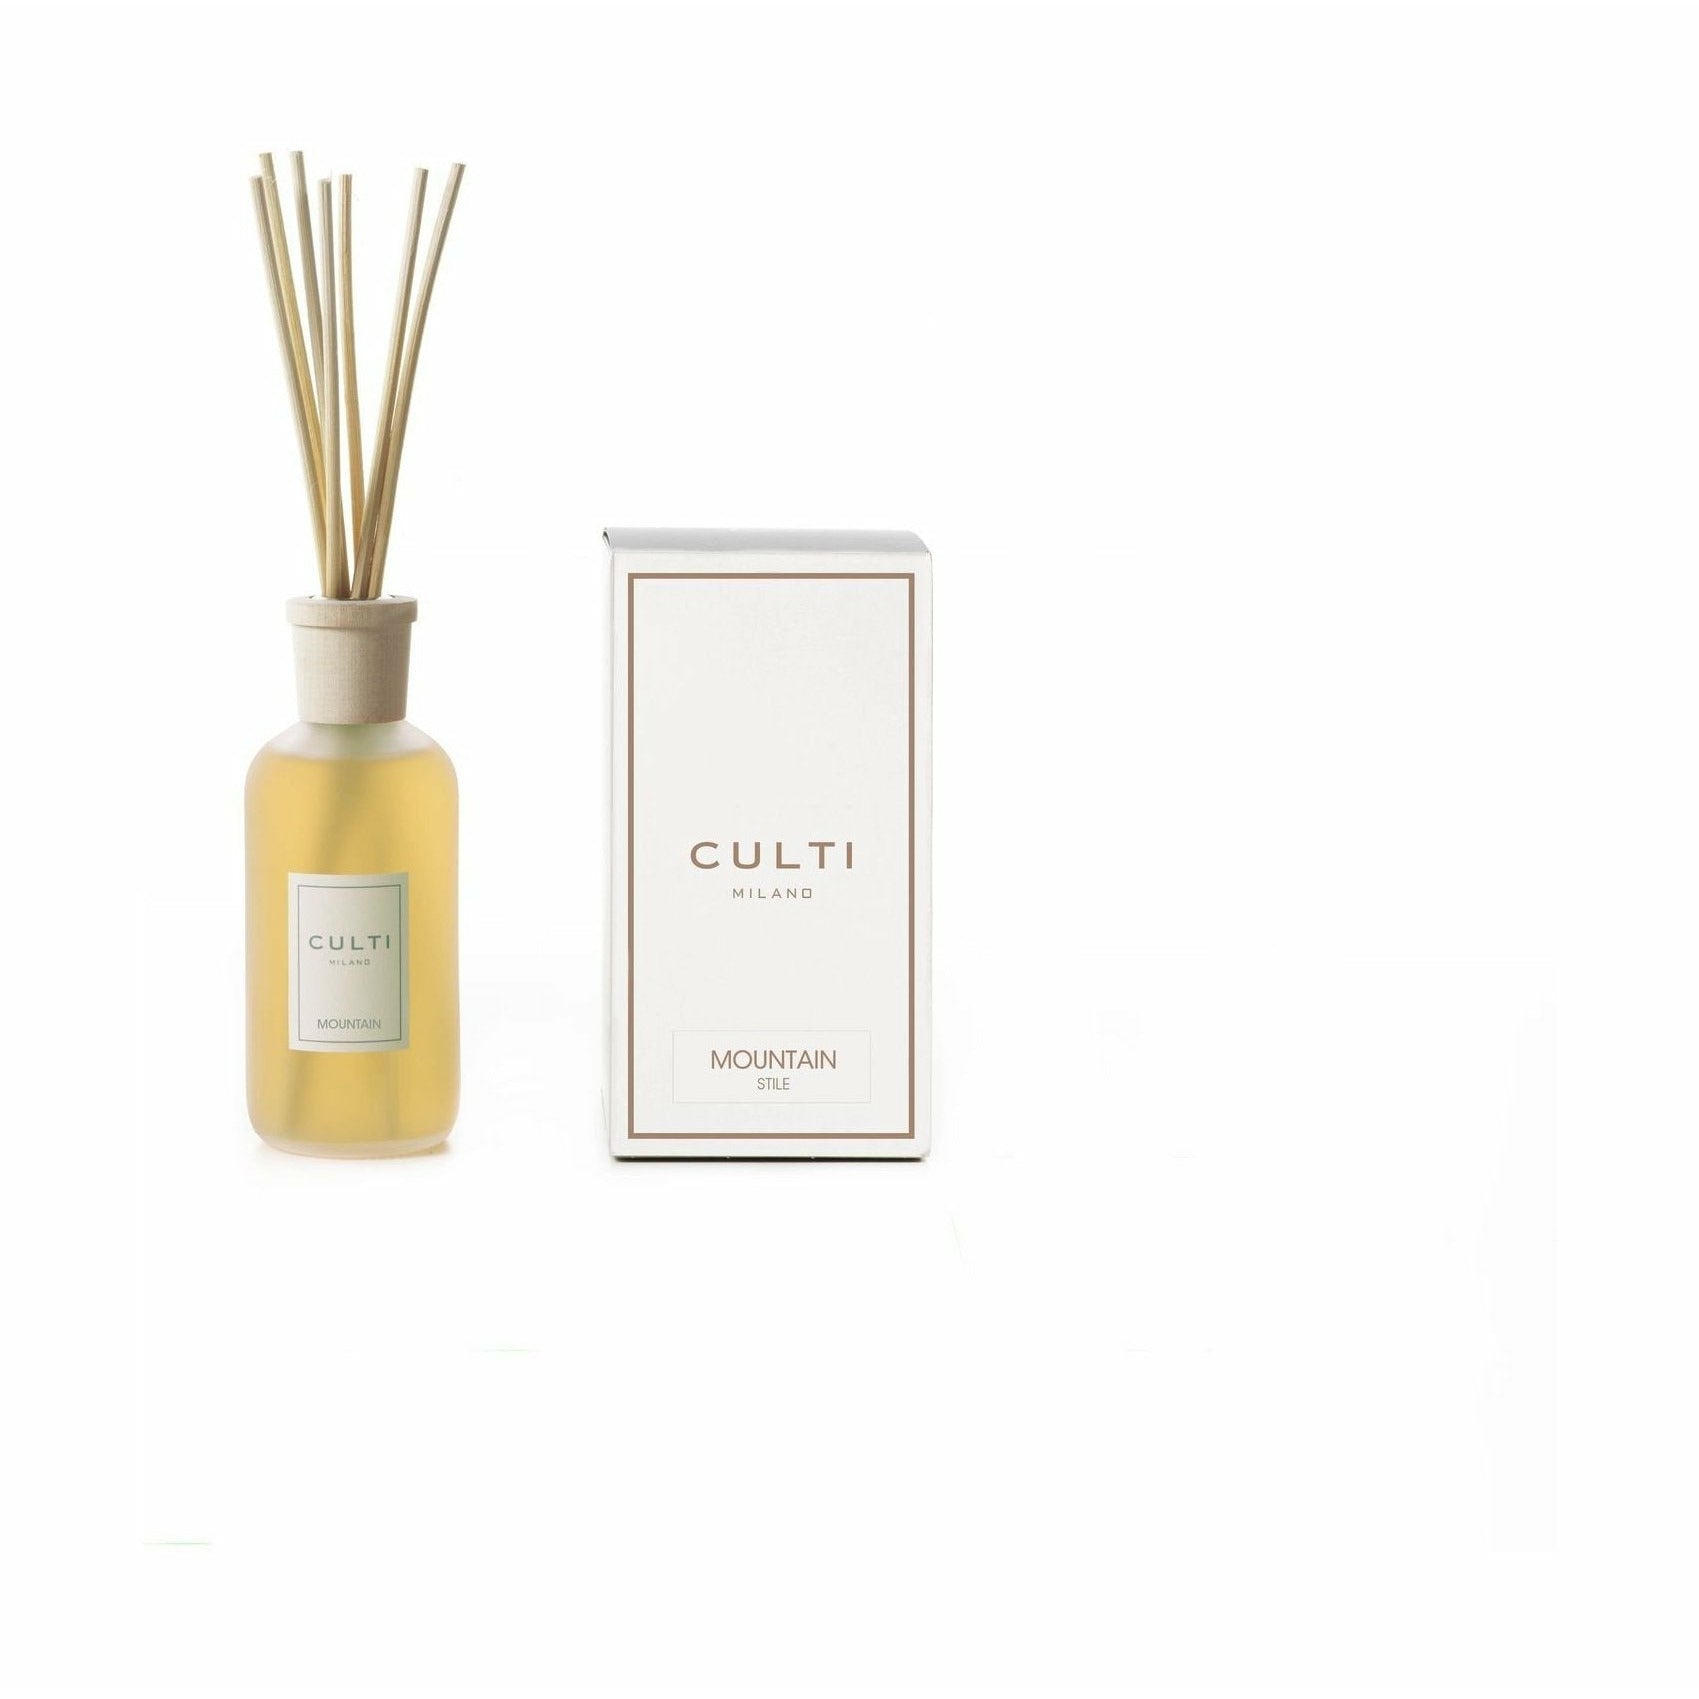 Culti Milano Mountain de diffuseur de parfum classique Stile, 250 ml